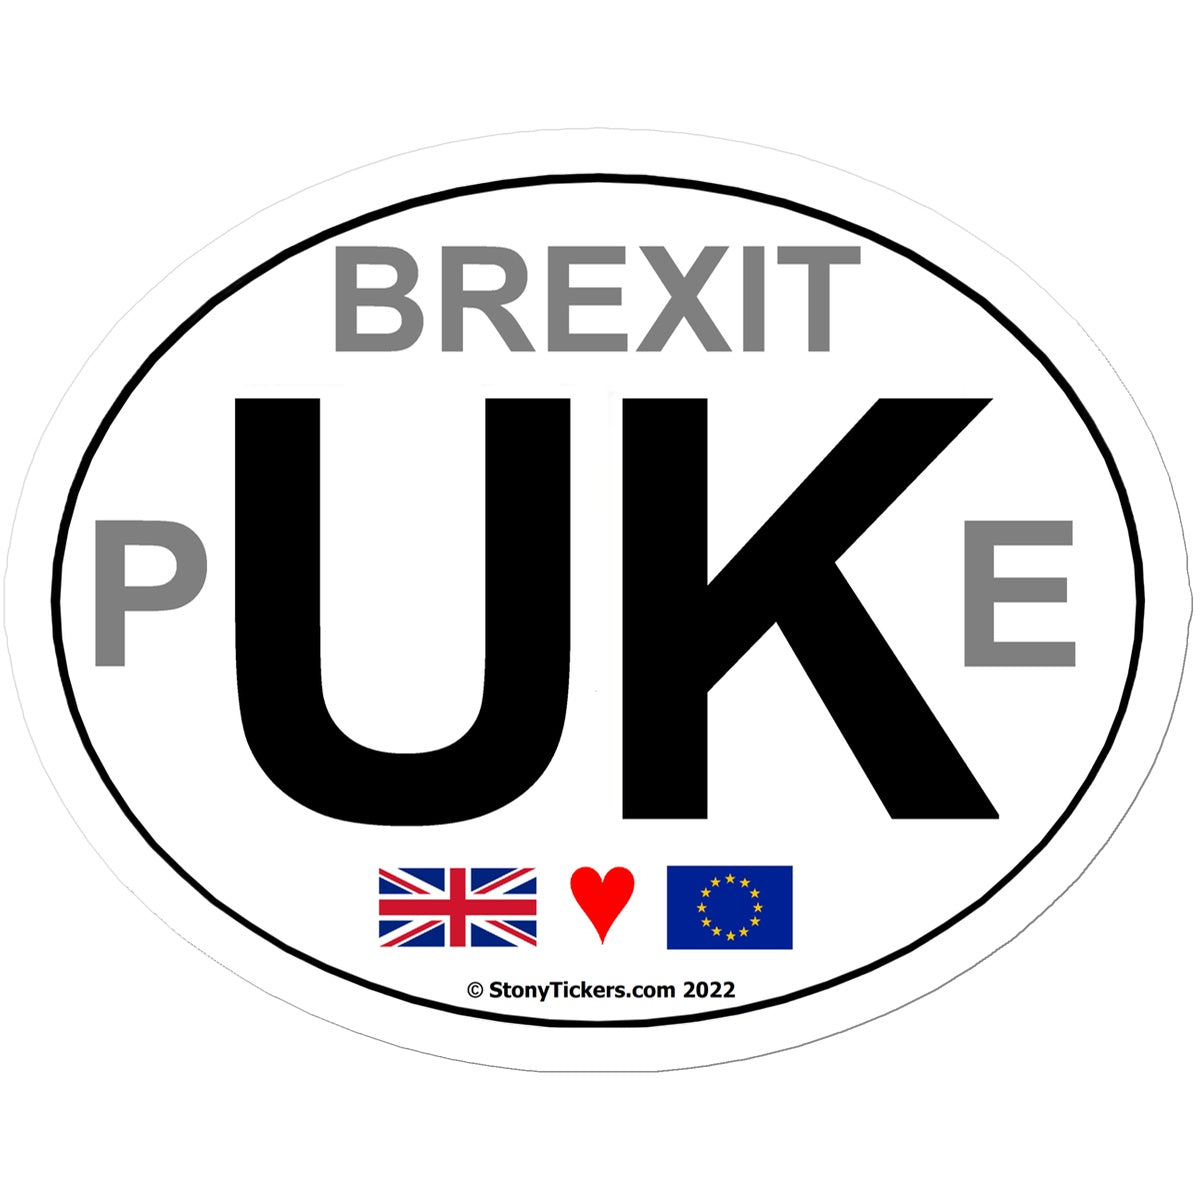 Brexit pUKe Car Sticker